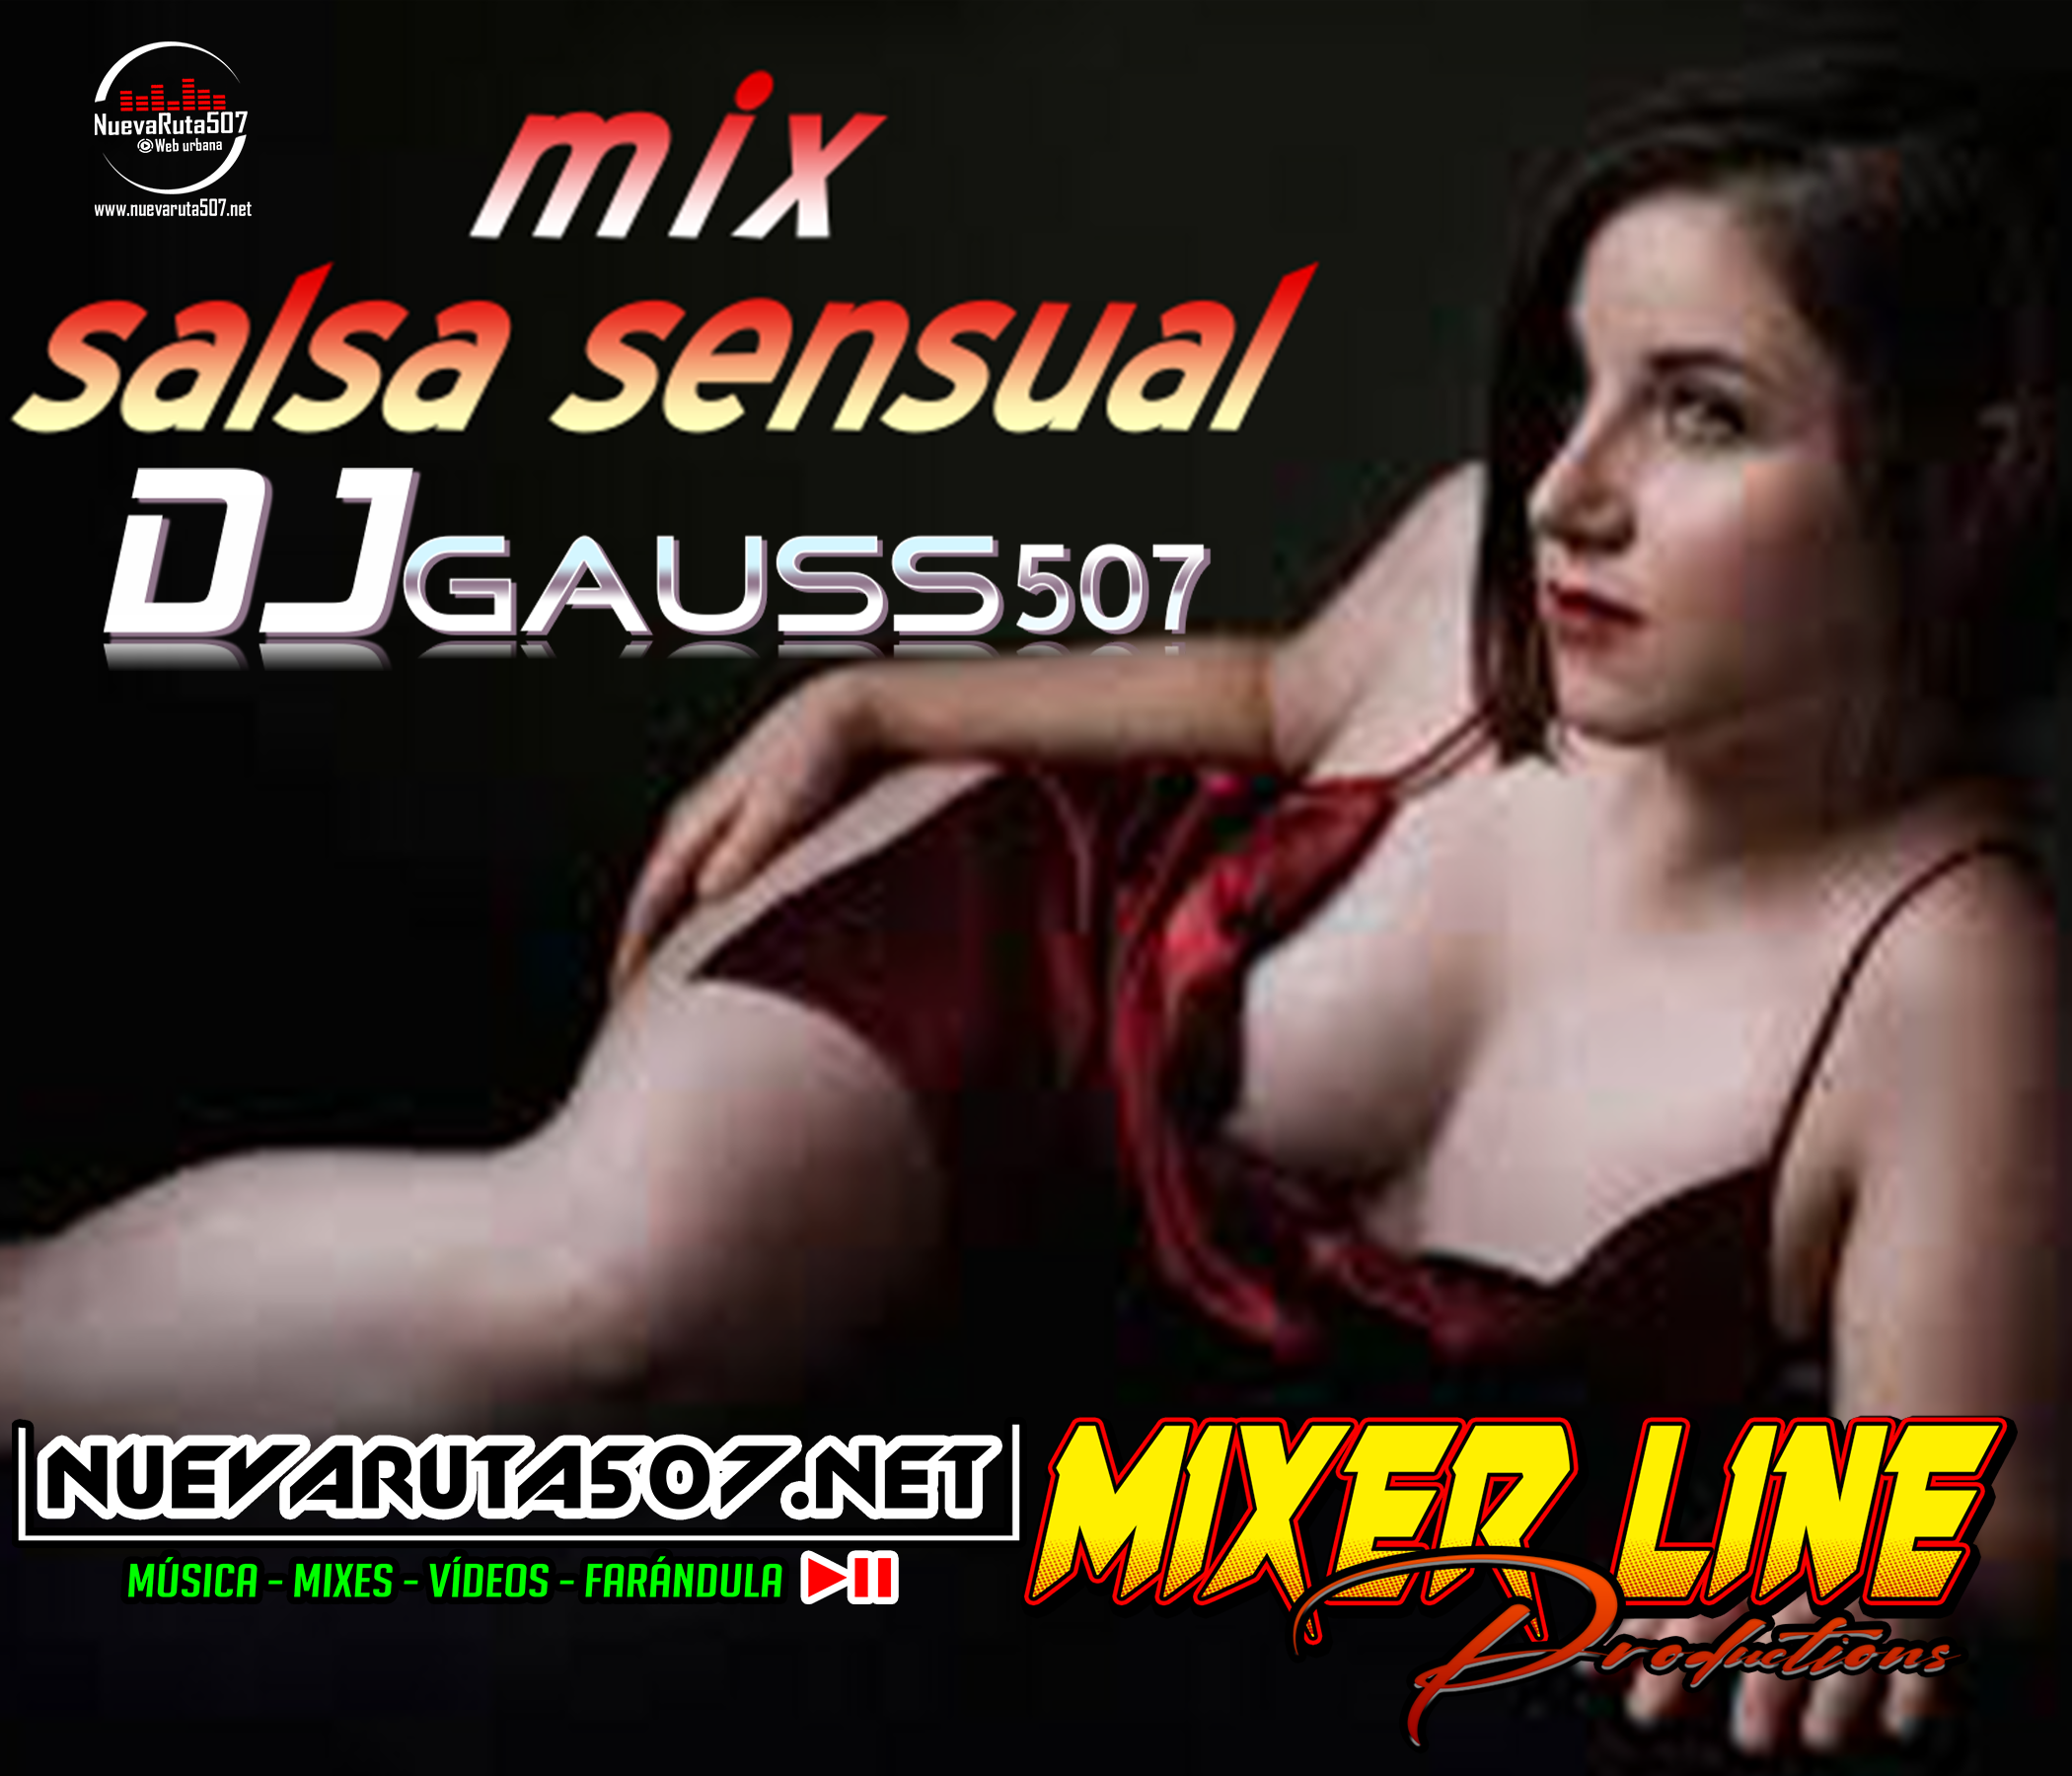 Dj Gauss507 - Salsa Sensual 2020 .mp3